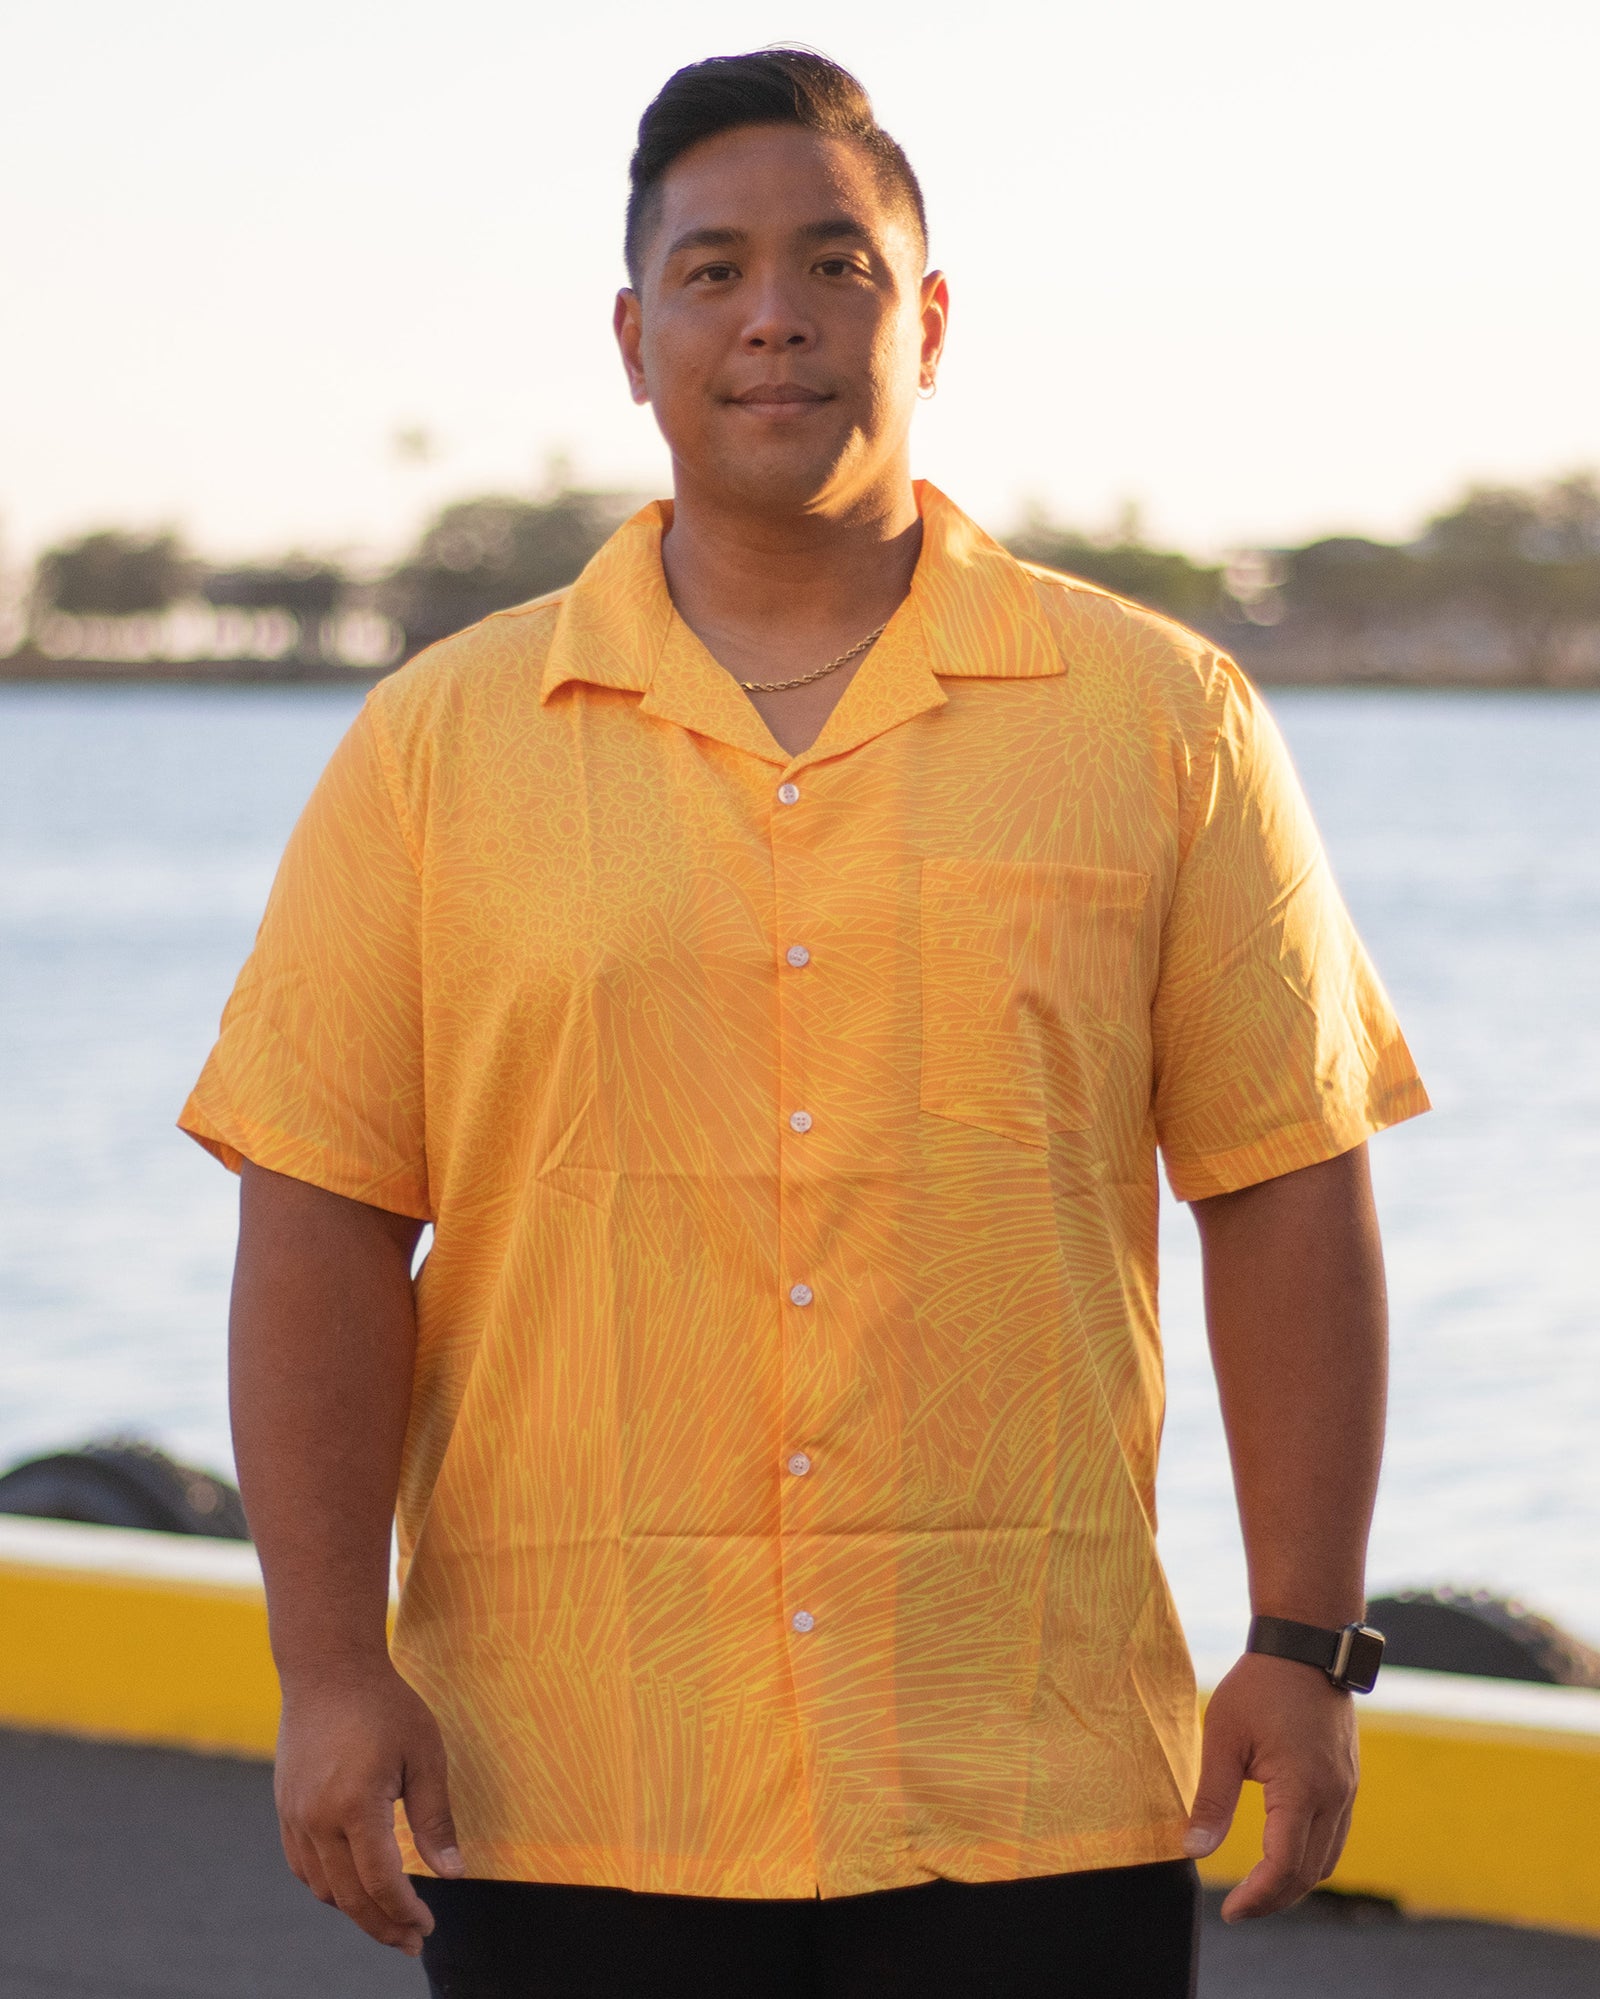 Pop-Up Mākeke - Kini Zamora - Silversword Aloha Shirt - Yellow - Front View